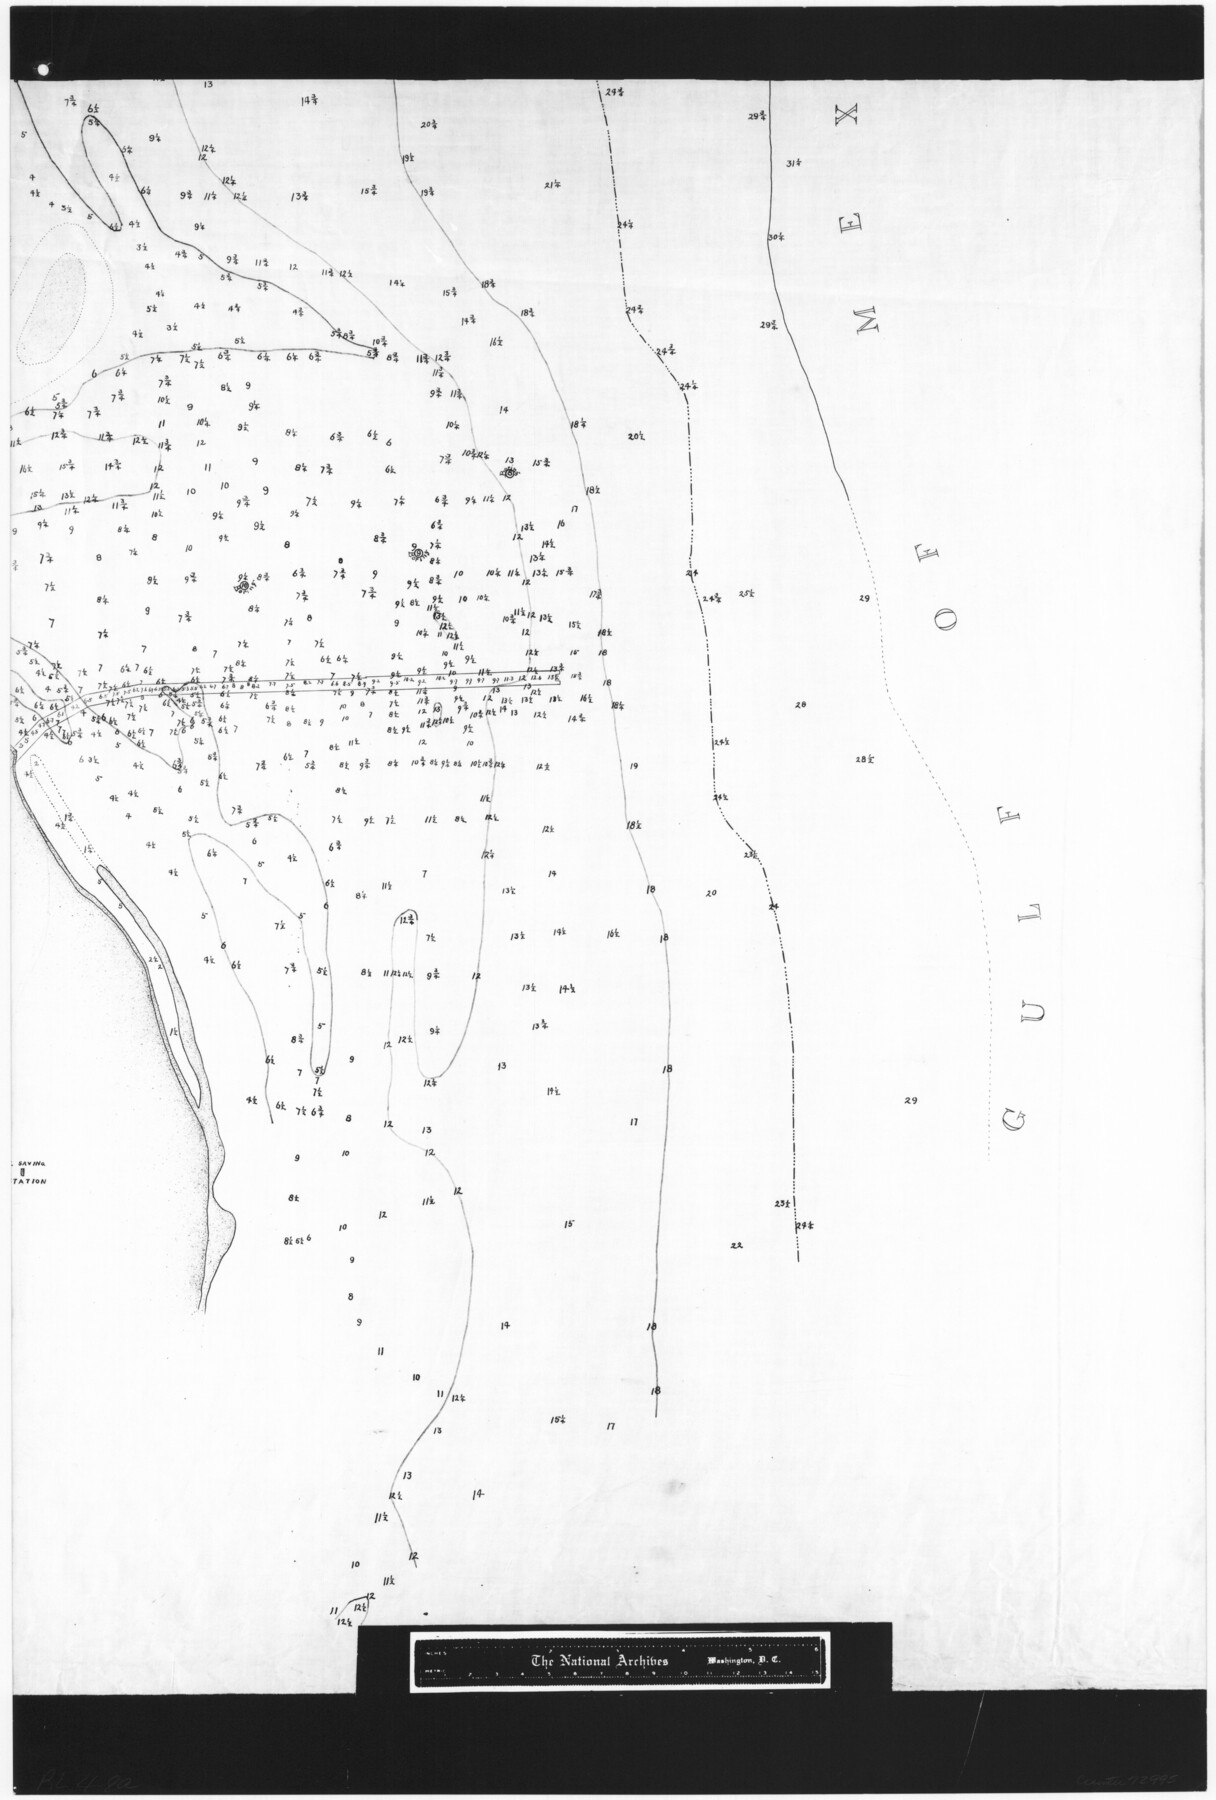 72995, Harbor of Brazos Santiago, Texas, General Map Collection